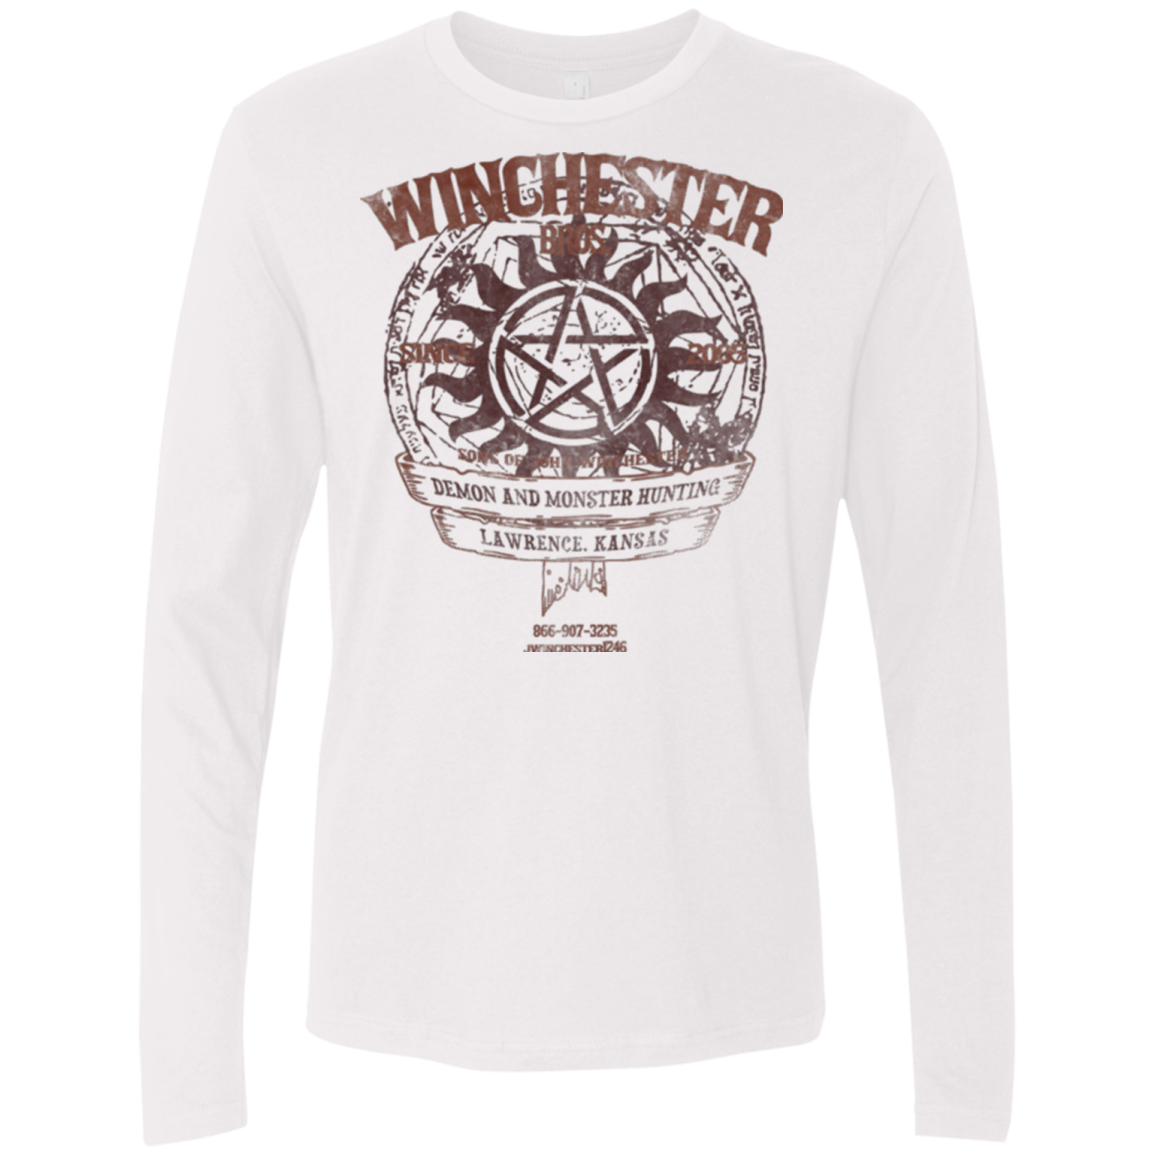 Winchester Bros Men's Premium Long Sleeve